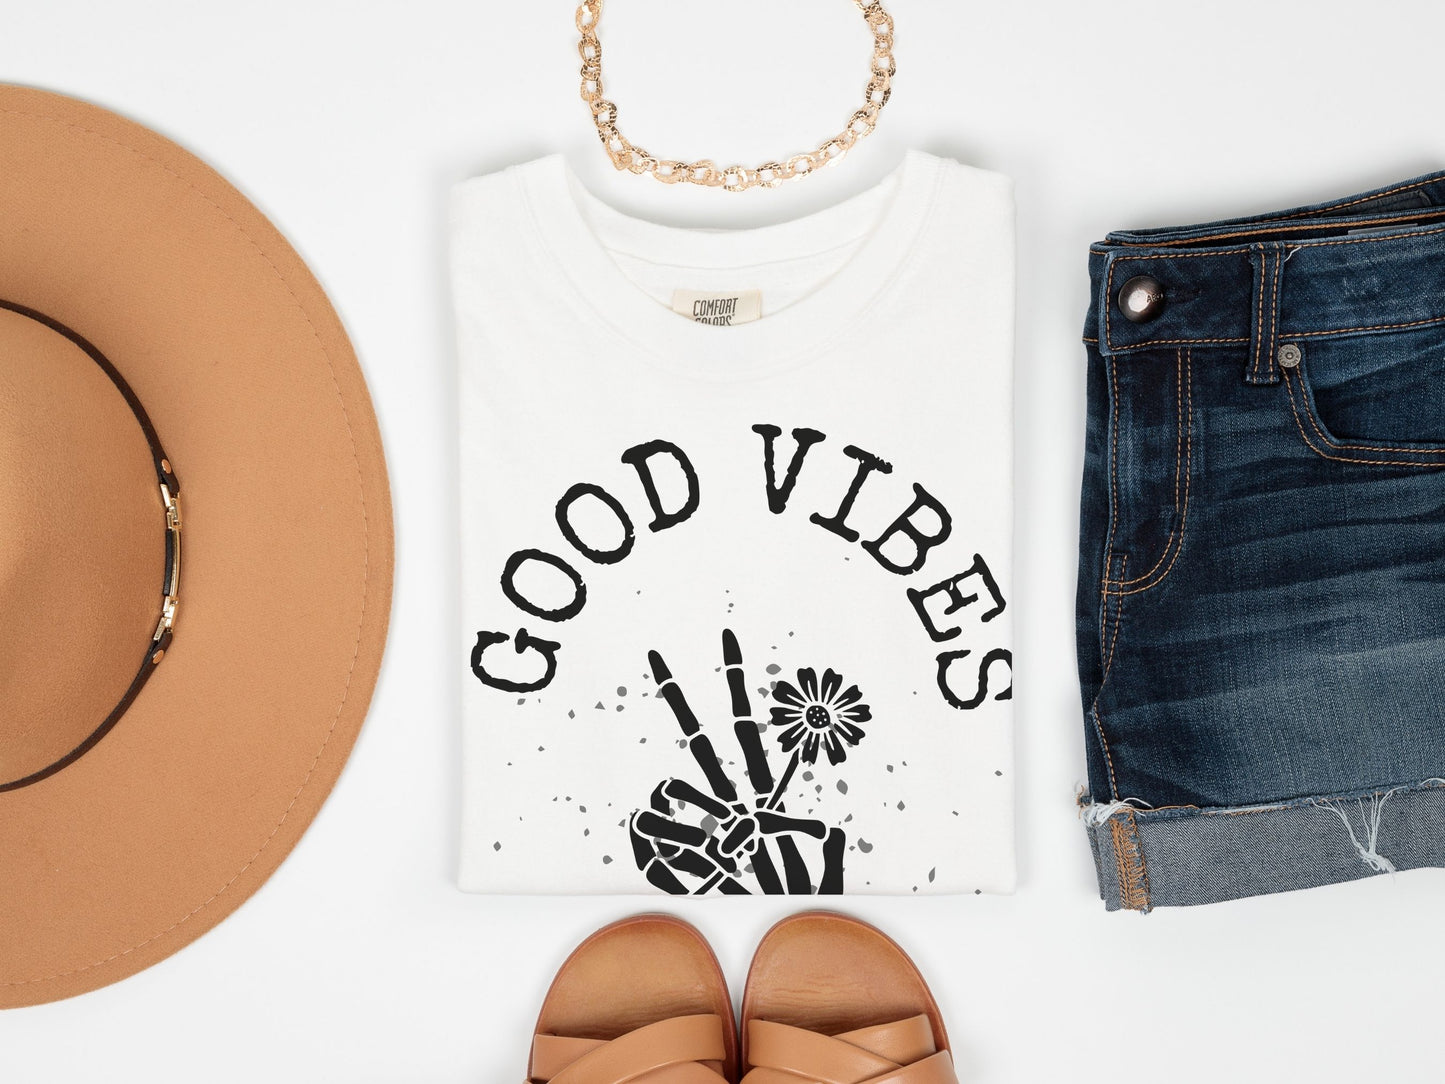 Good Vibes Only T-Shirt - Black Writing